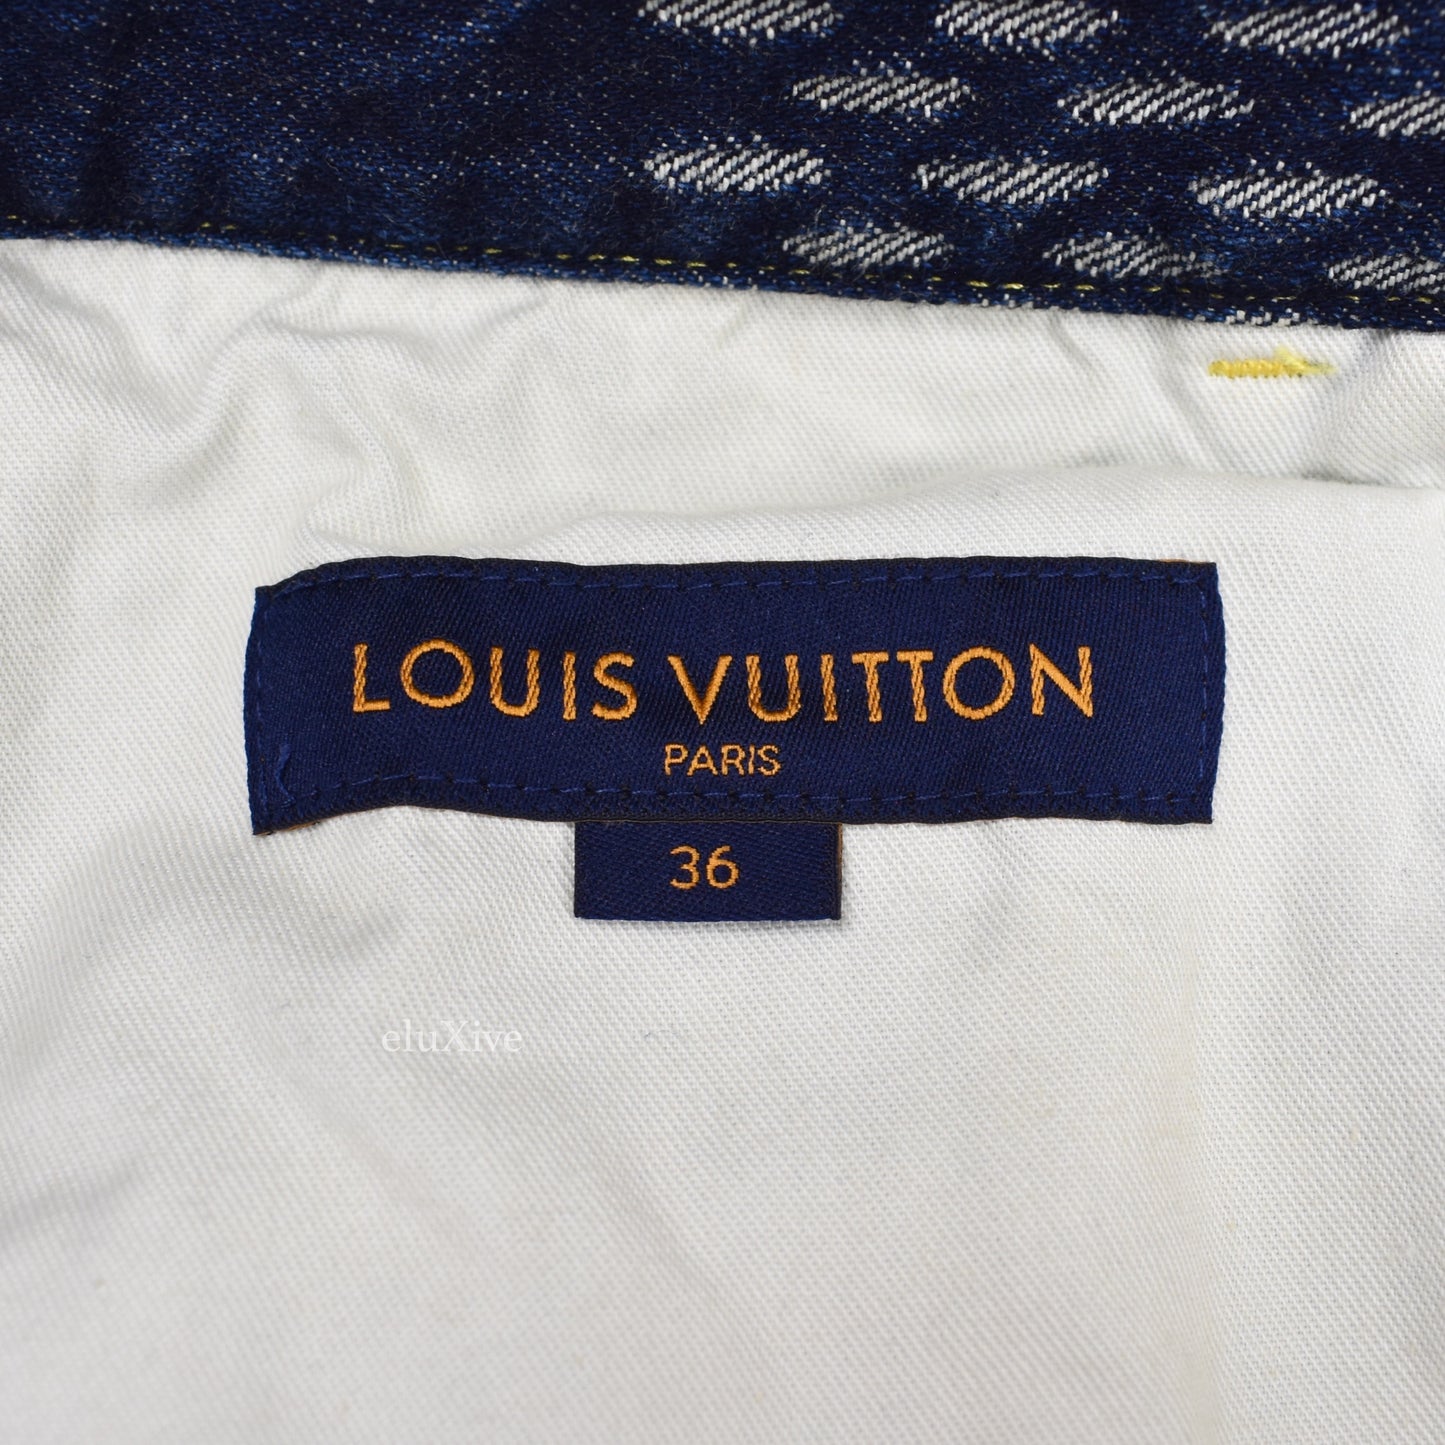 Louis Vuitton (LV) x Nigo jeans (denim pant) - Cloyad - 379¥ : r